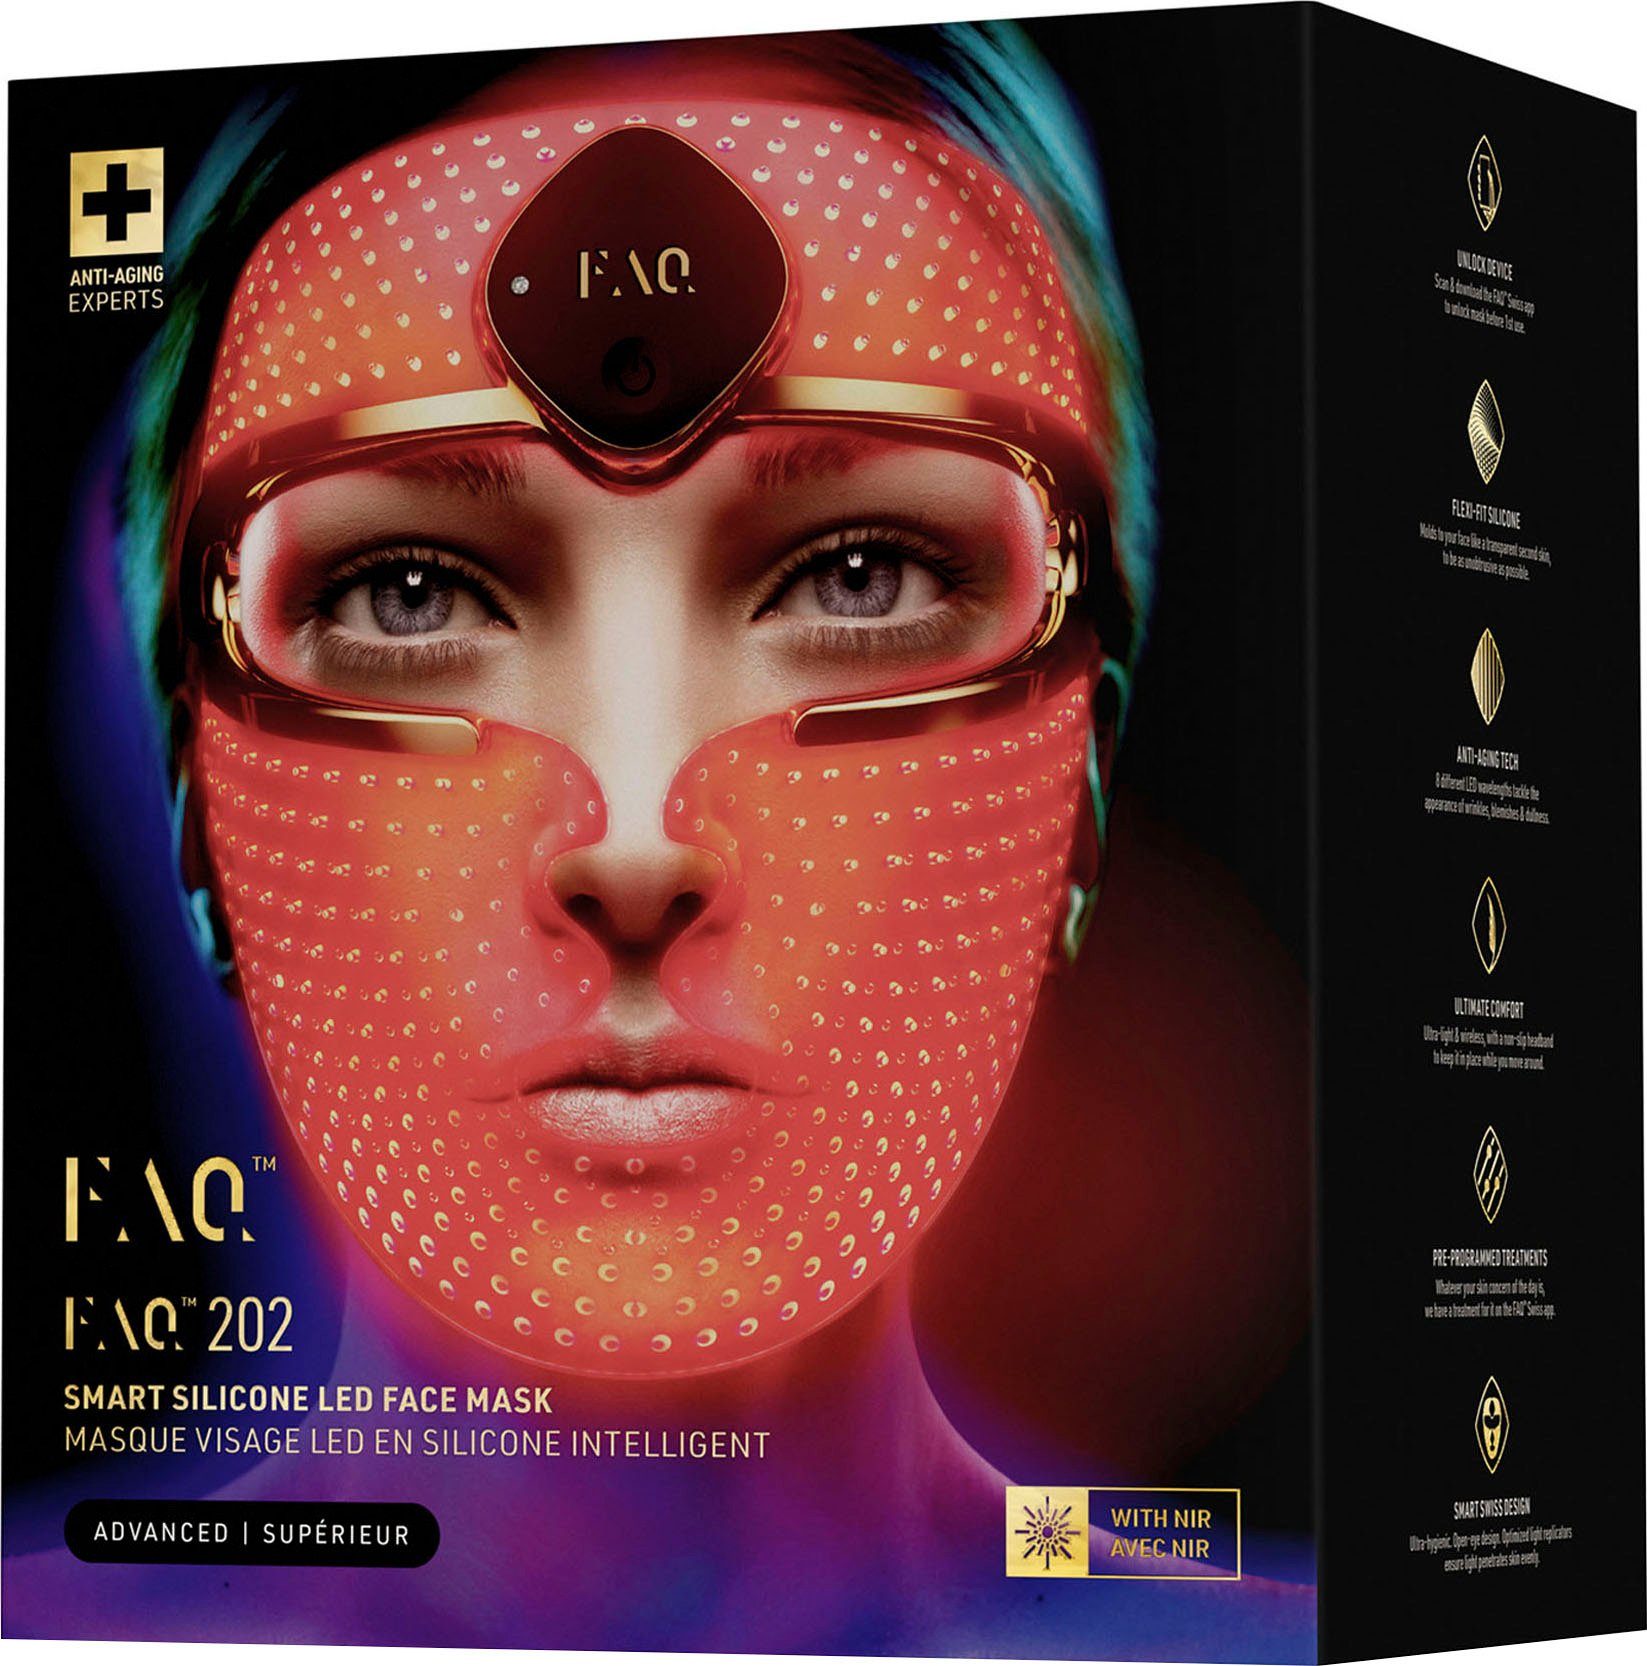 FAQ™ Mikrodermabrasionsgerät FAQ™ mit LED Mask, Silicone 8 Gesichtsmaske 202 Smart LED Farben Face